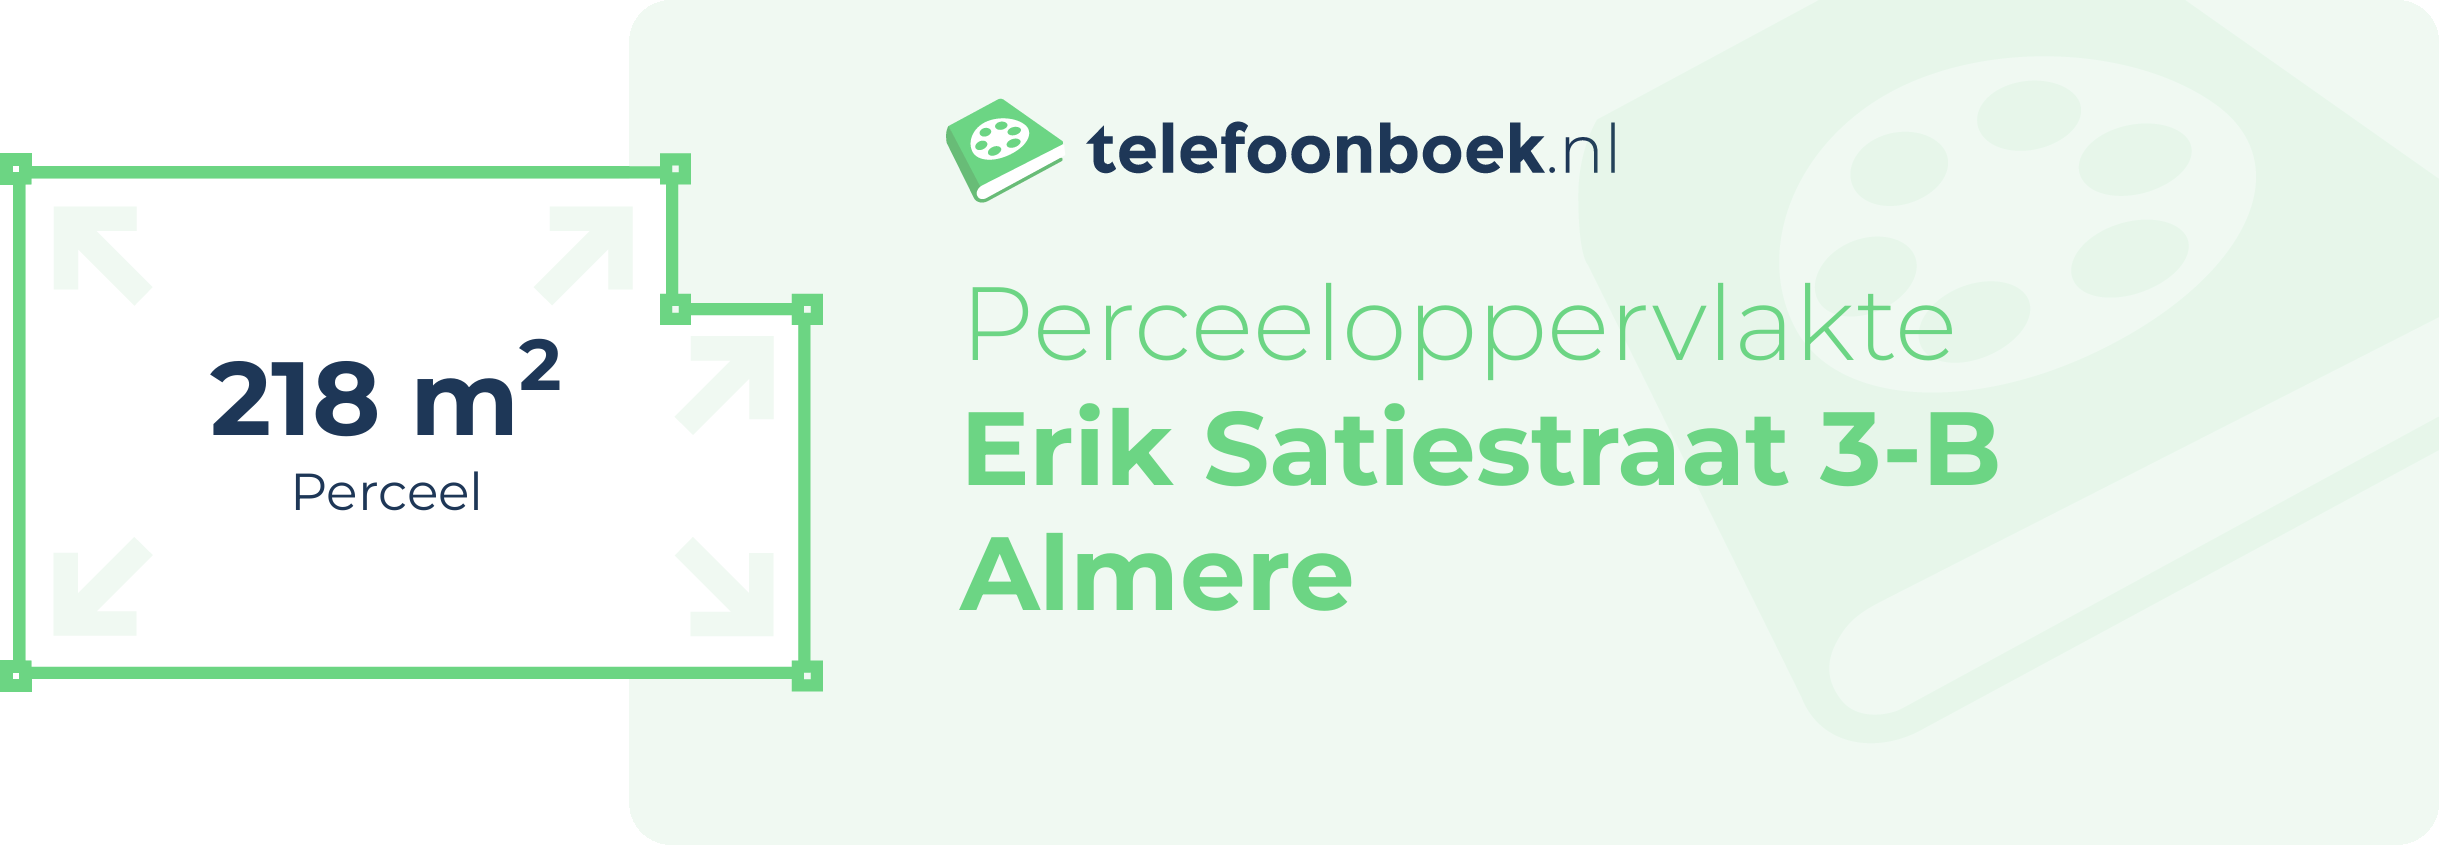 Perceeloppervlakte Erik Satiestraat 3-B Almere